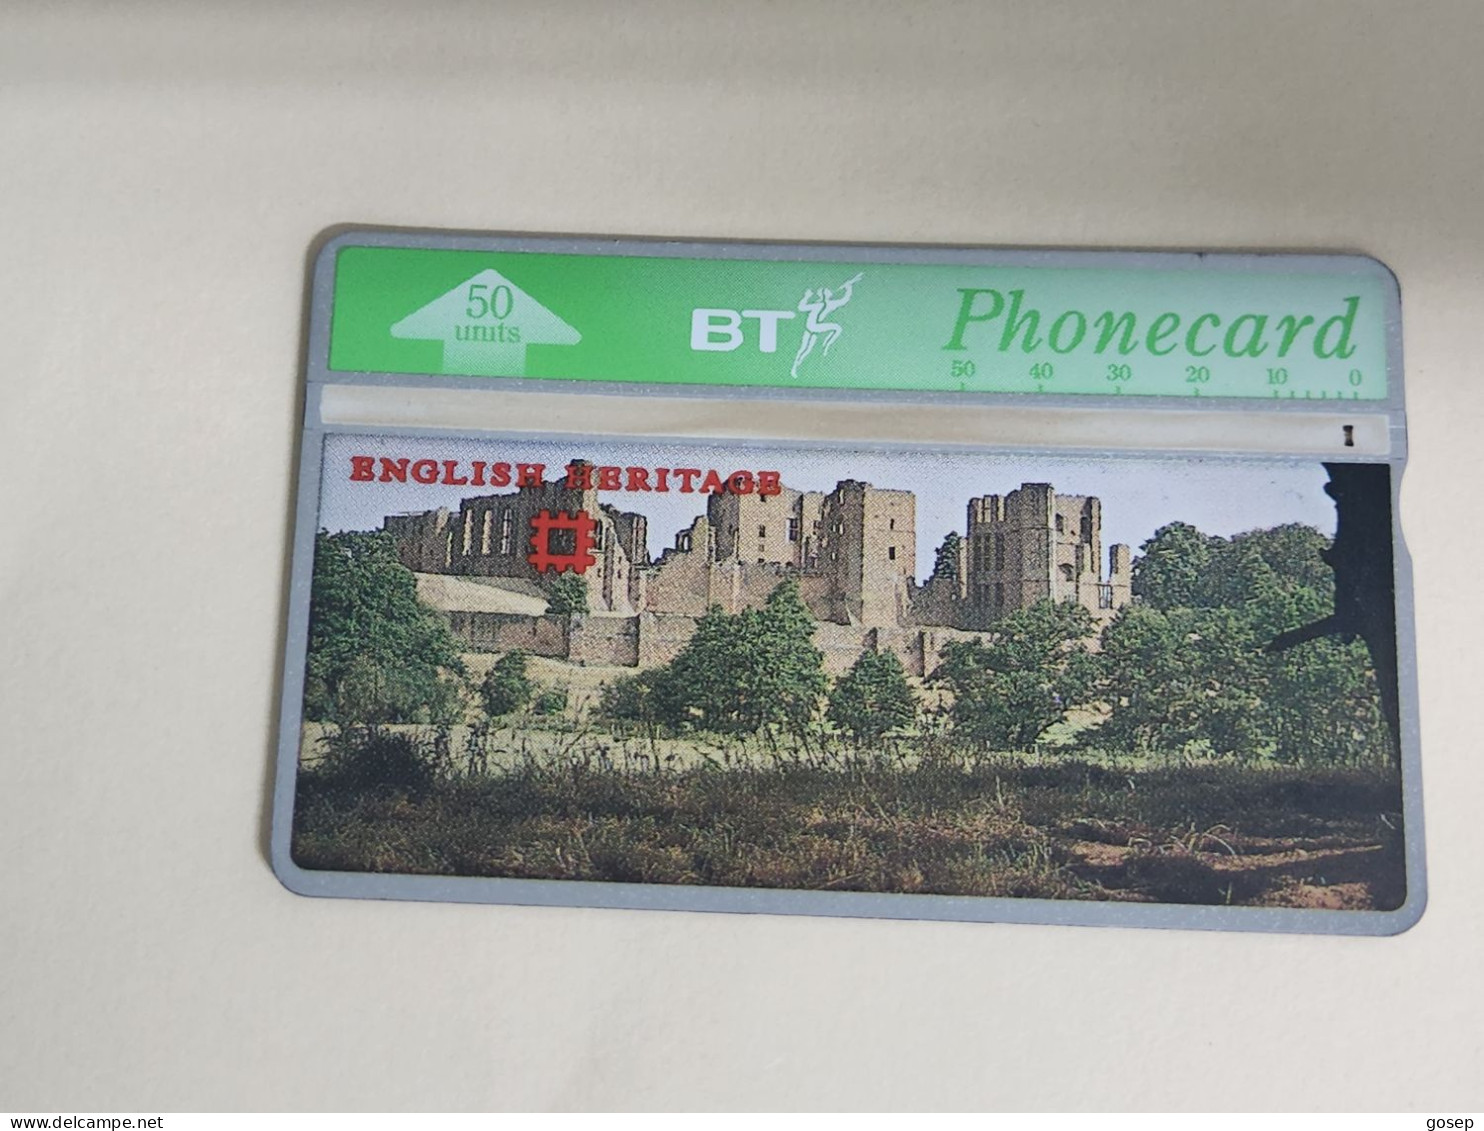 United Kingdom-(BTA108)-HERITAGE-Kenilworth Castle-(182)(50units)(528D70525)price Cataloge3.00£-used+1card Prepiad Free - BT Advertising Issues